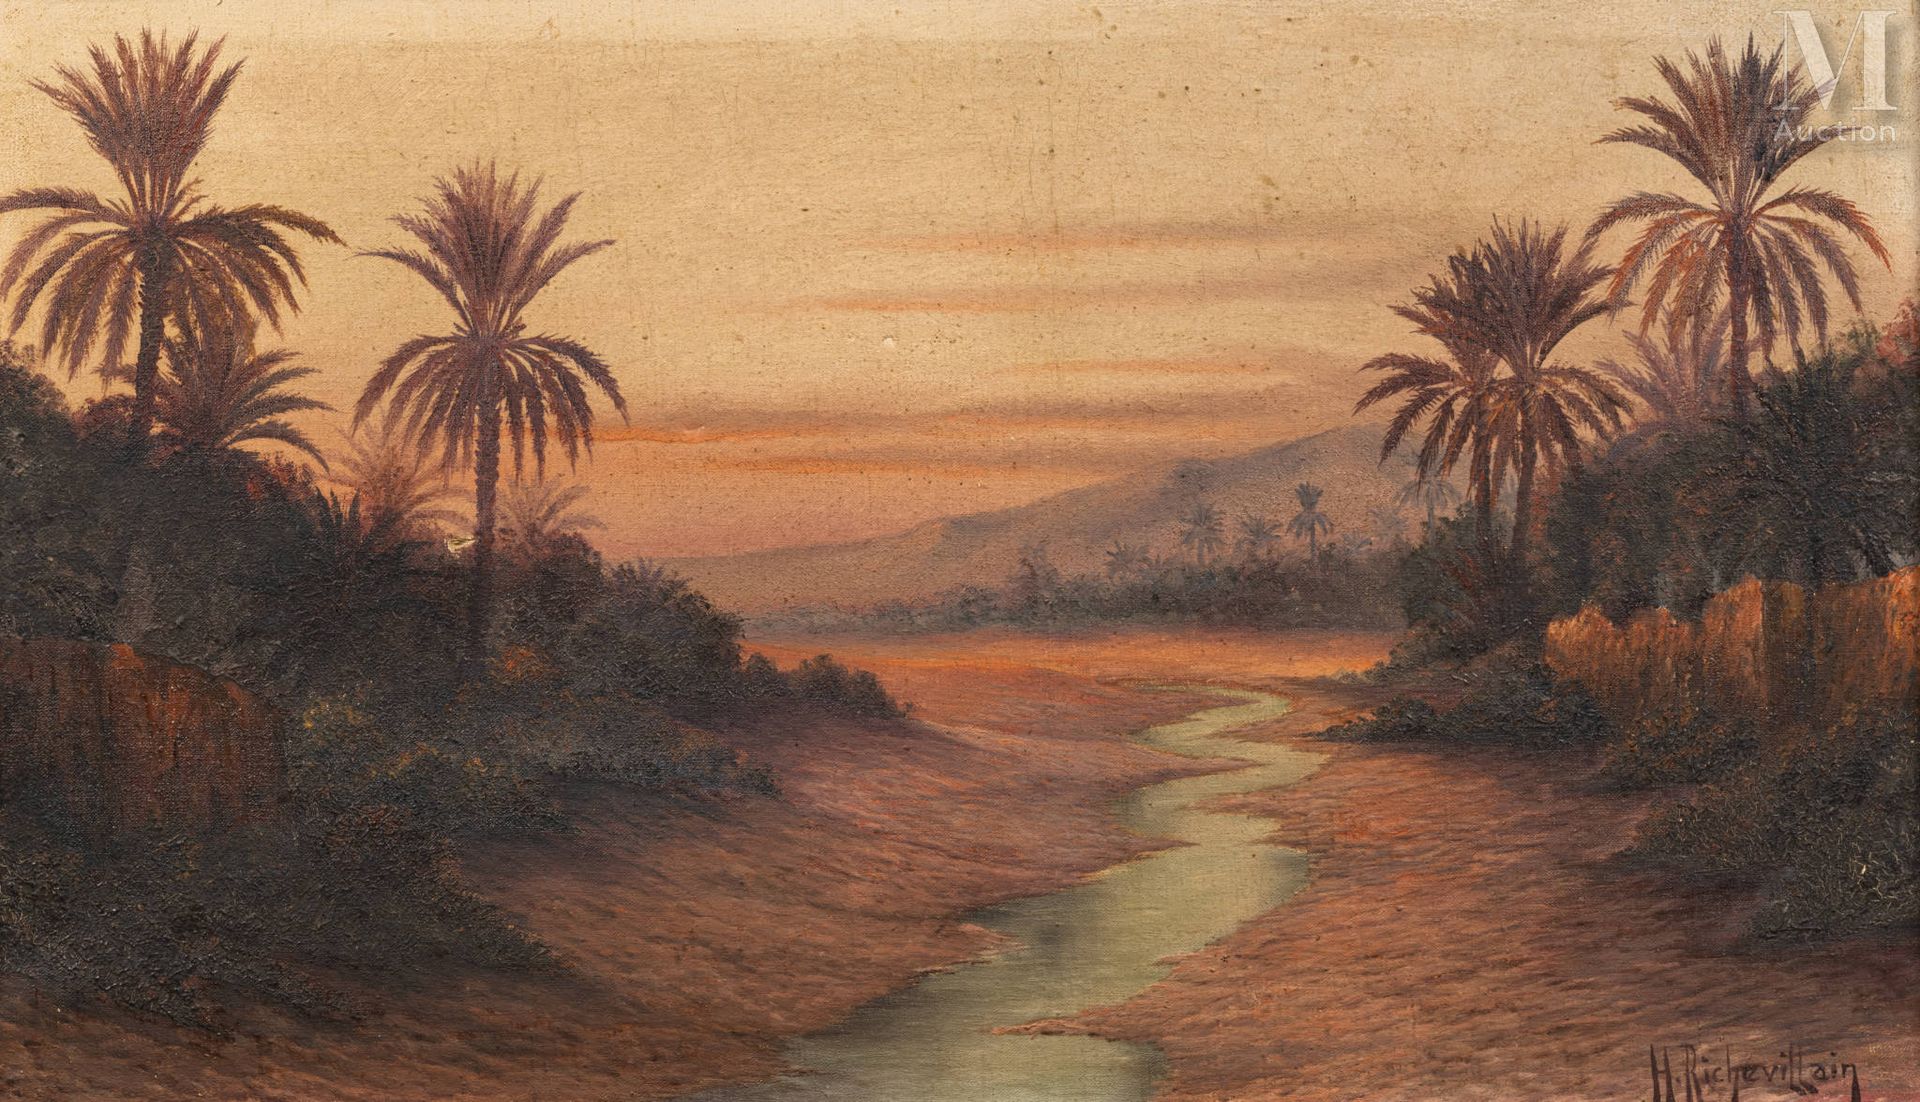 Henri RICHEVILLAIN (XIXE-XXE SIÈCLE) Sonnenuntergang über einer Oase

Öl auf Lei&hellip;